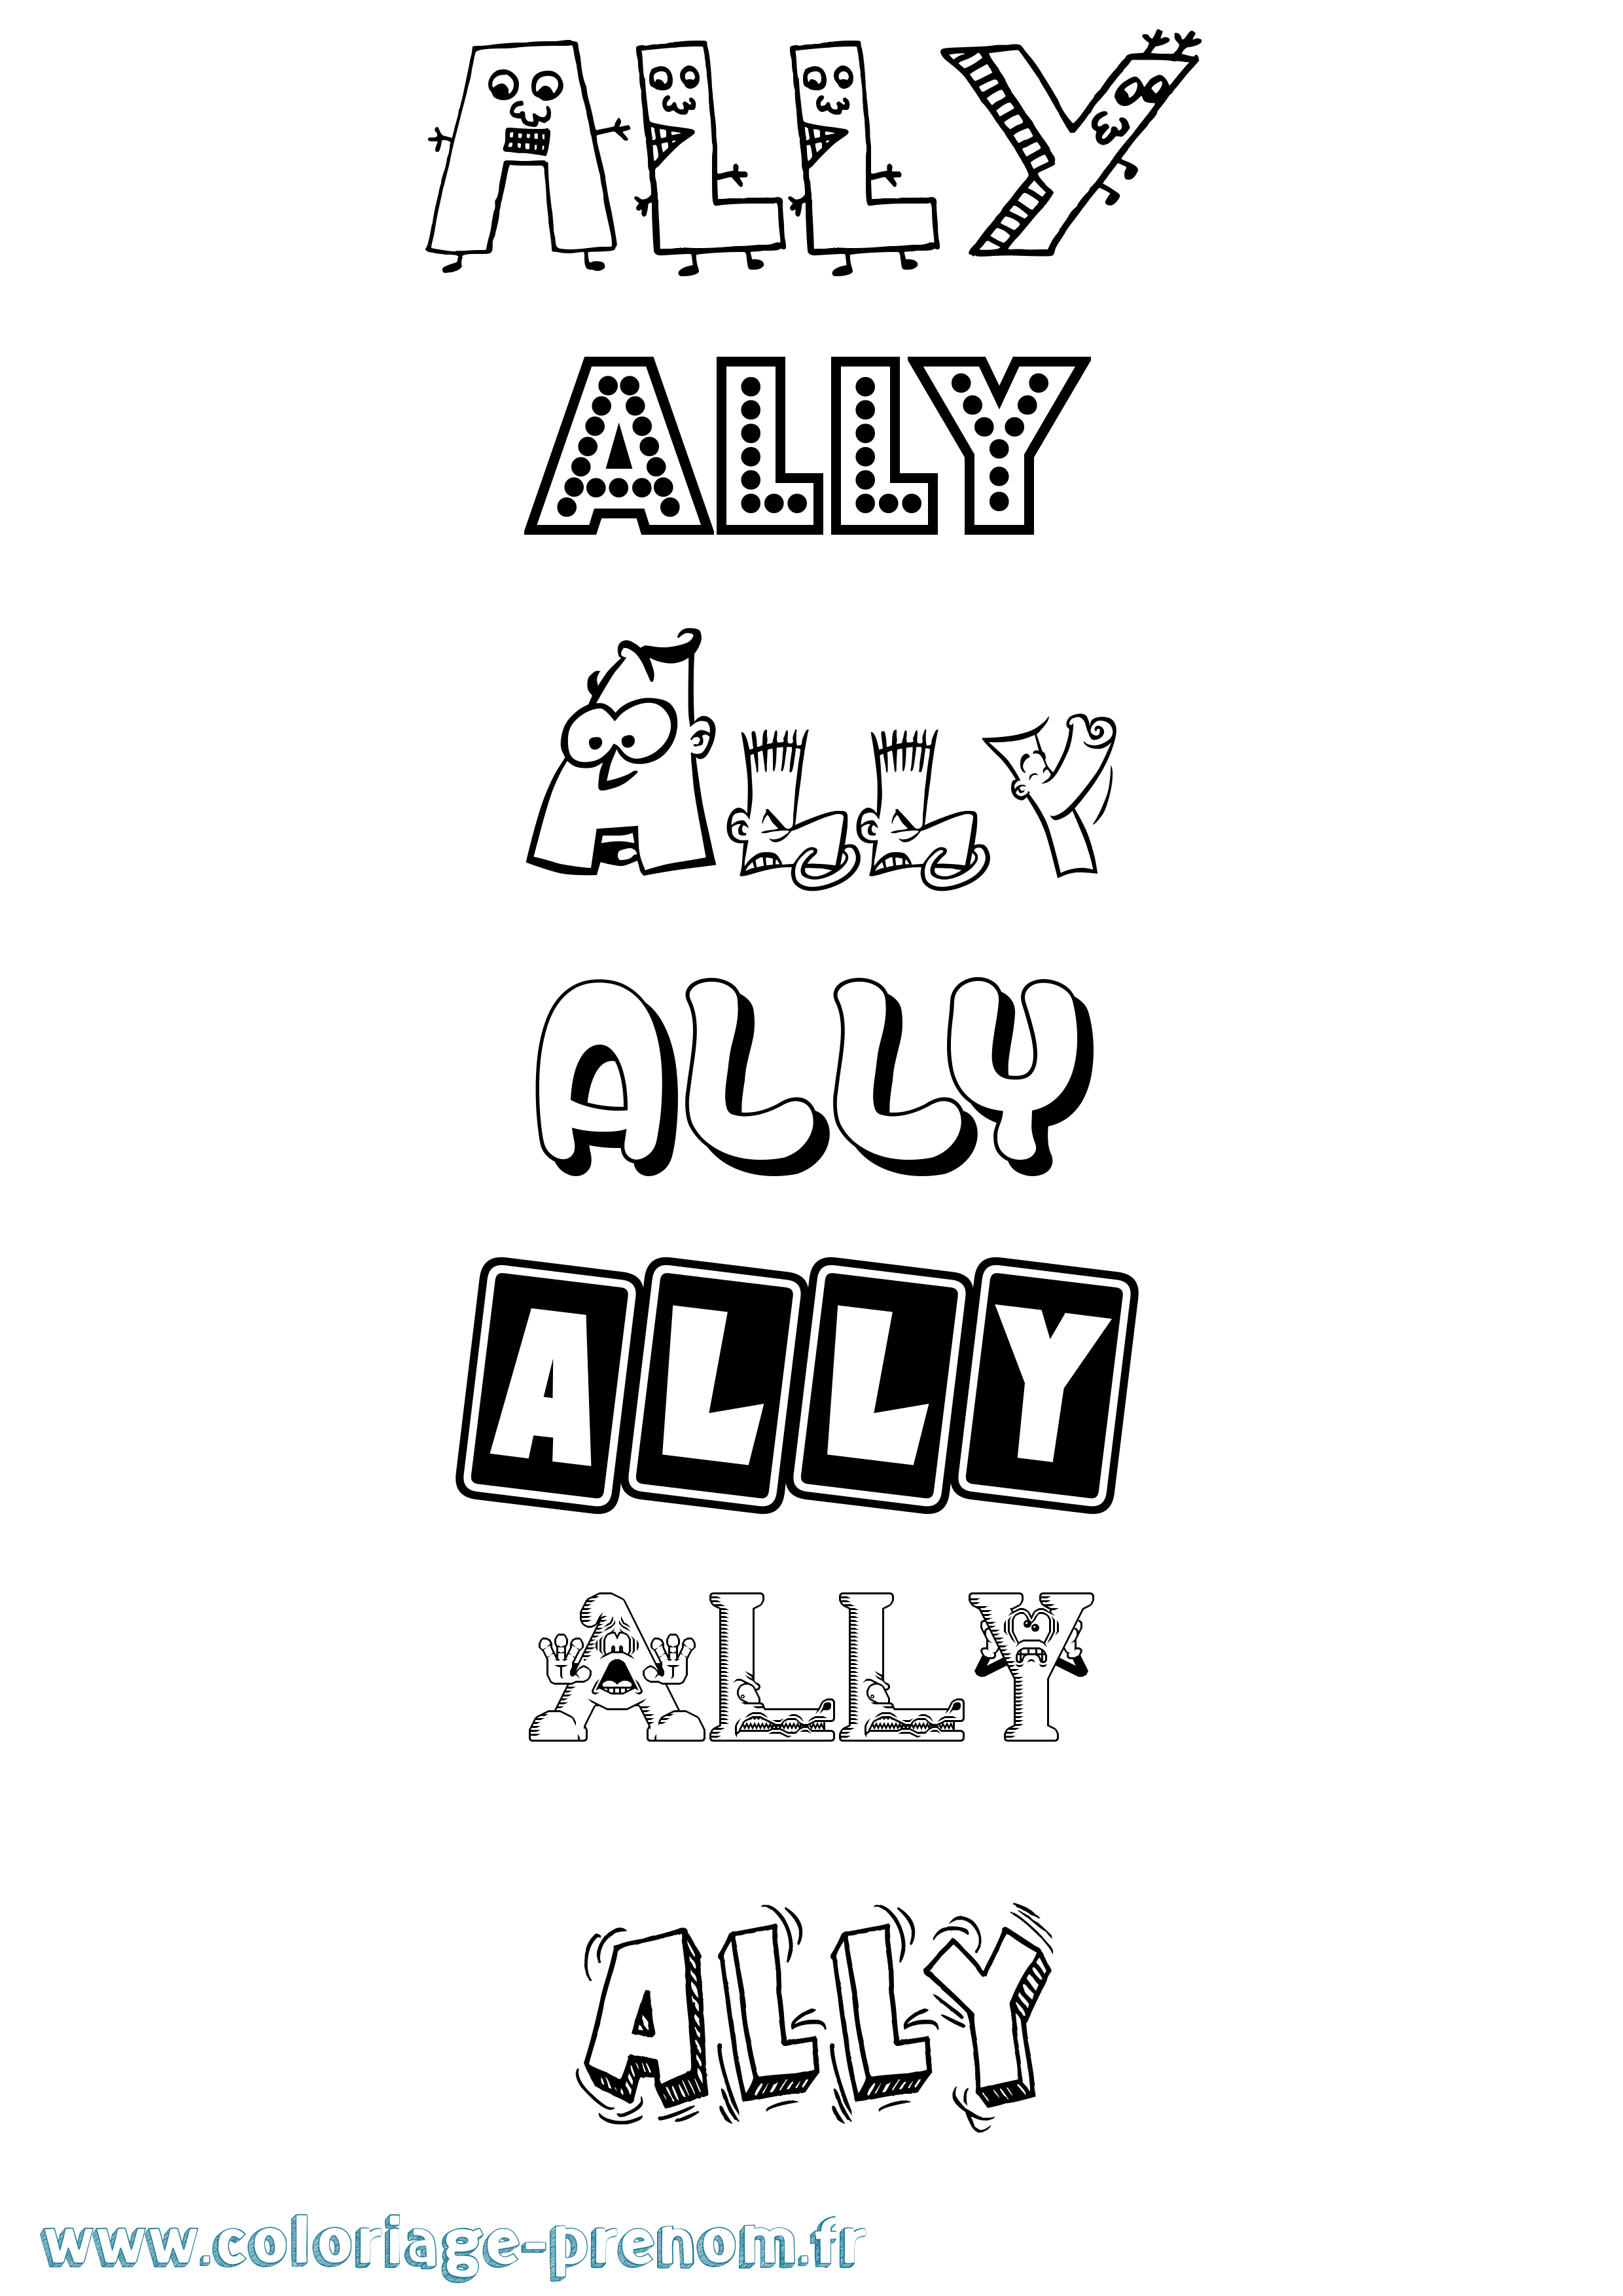 Coloriage prénom Ally Fun